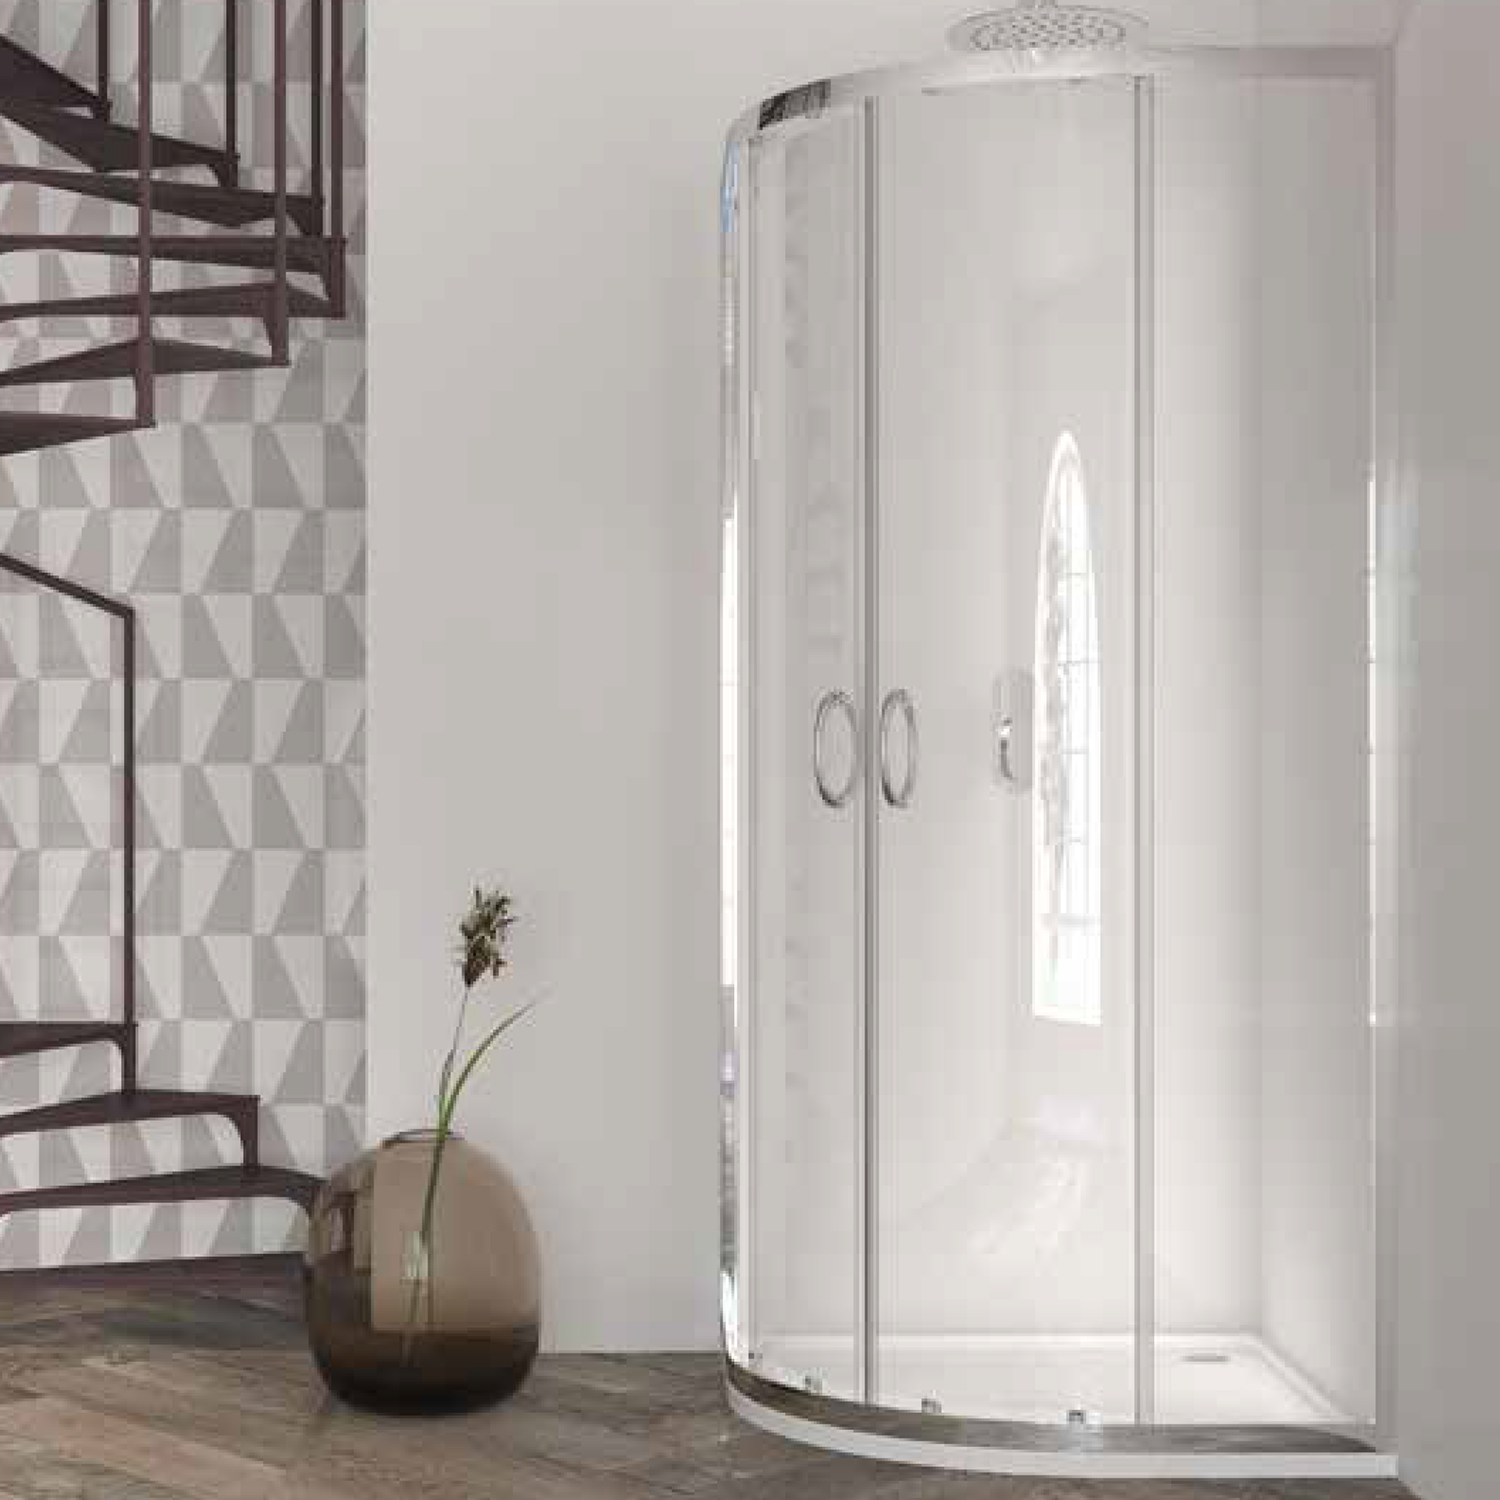 Cabina de ducha completa (80 x 80 cm)